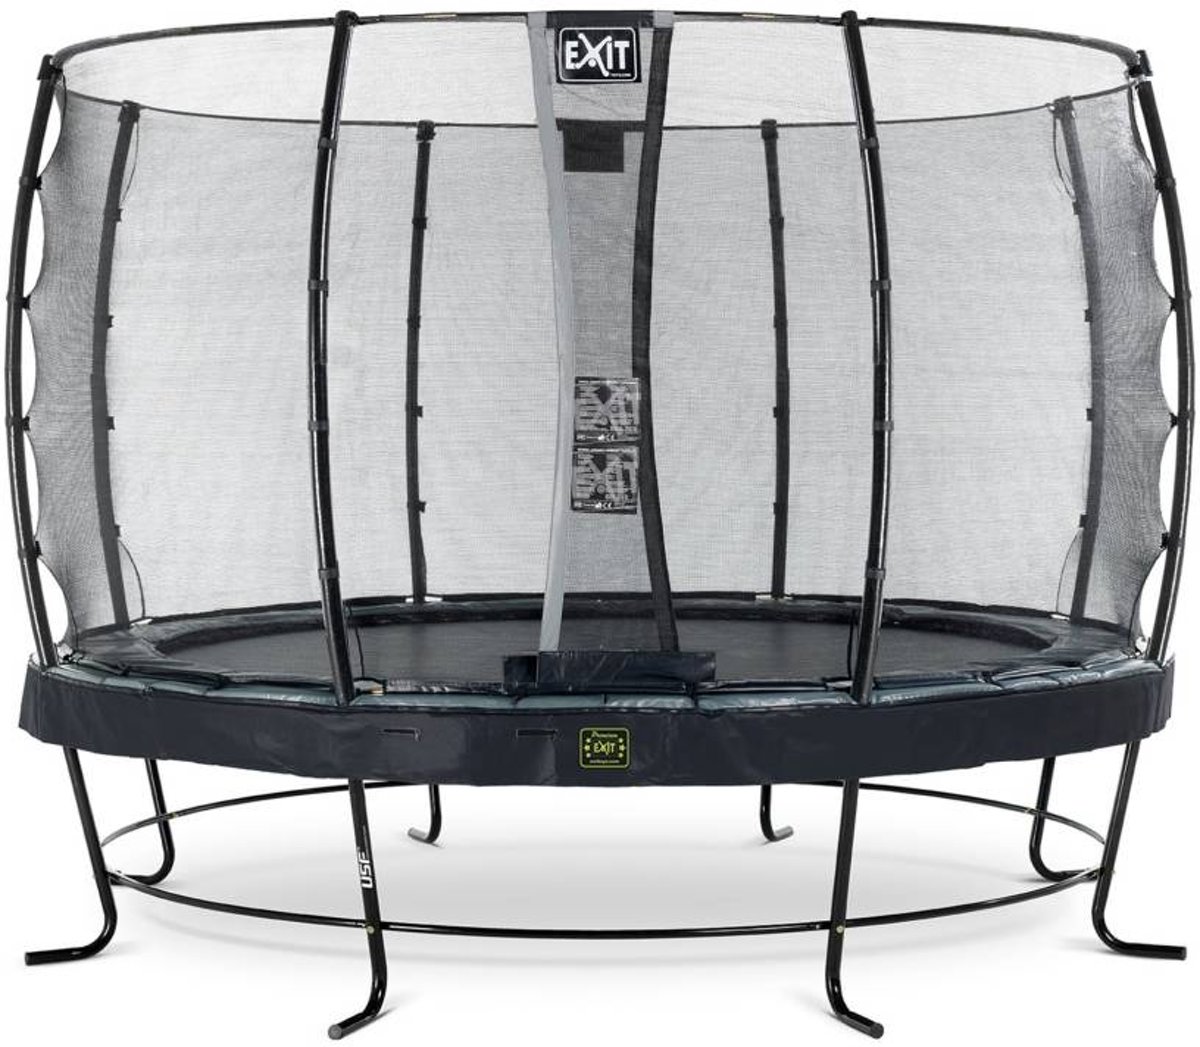 EXIT Elegant Premium trampoline ø366cm met veiligheidsnet Economy - zwart